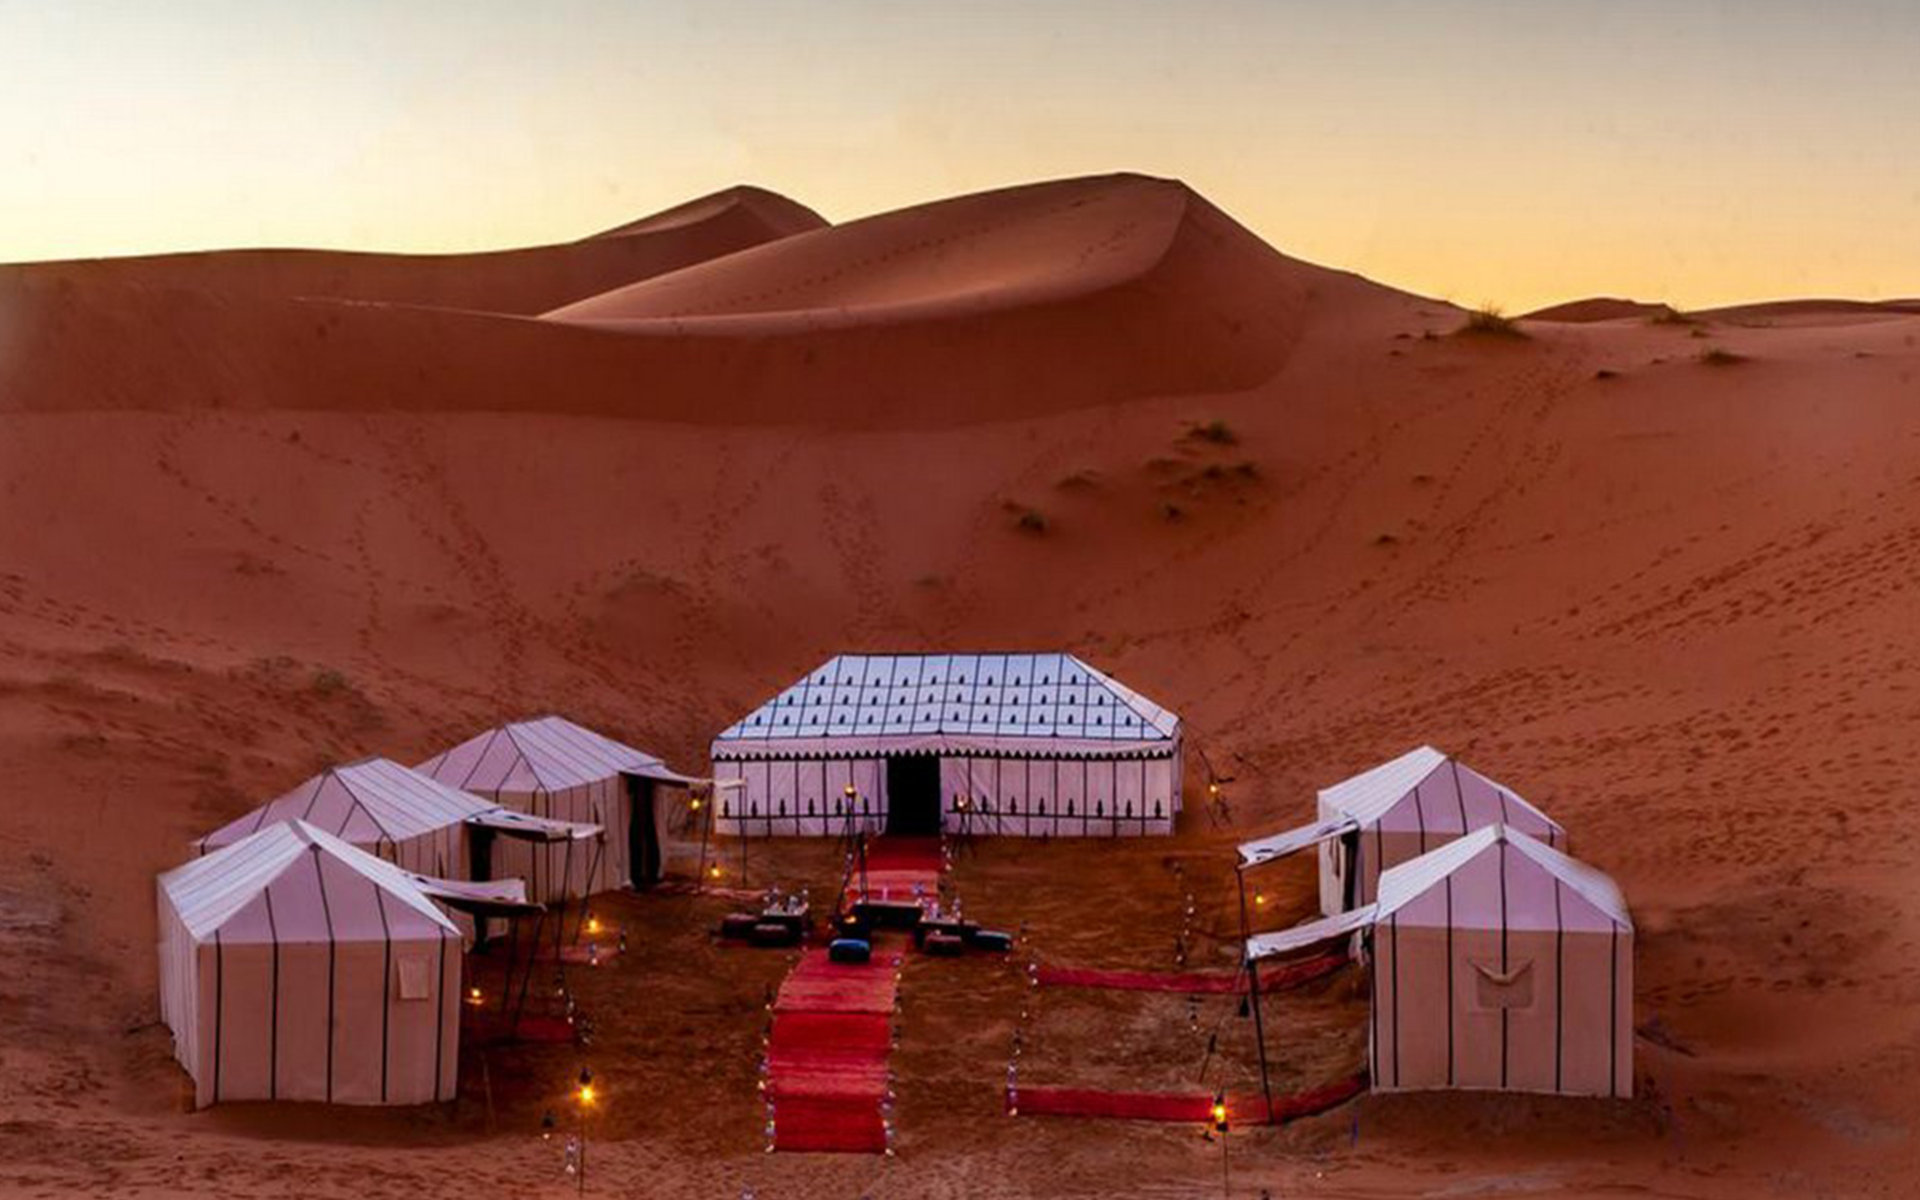 Private 8 days tour from Casablanca to Marrakech via Sahara Desert